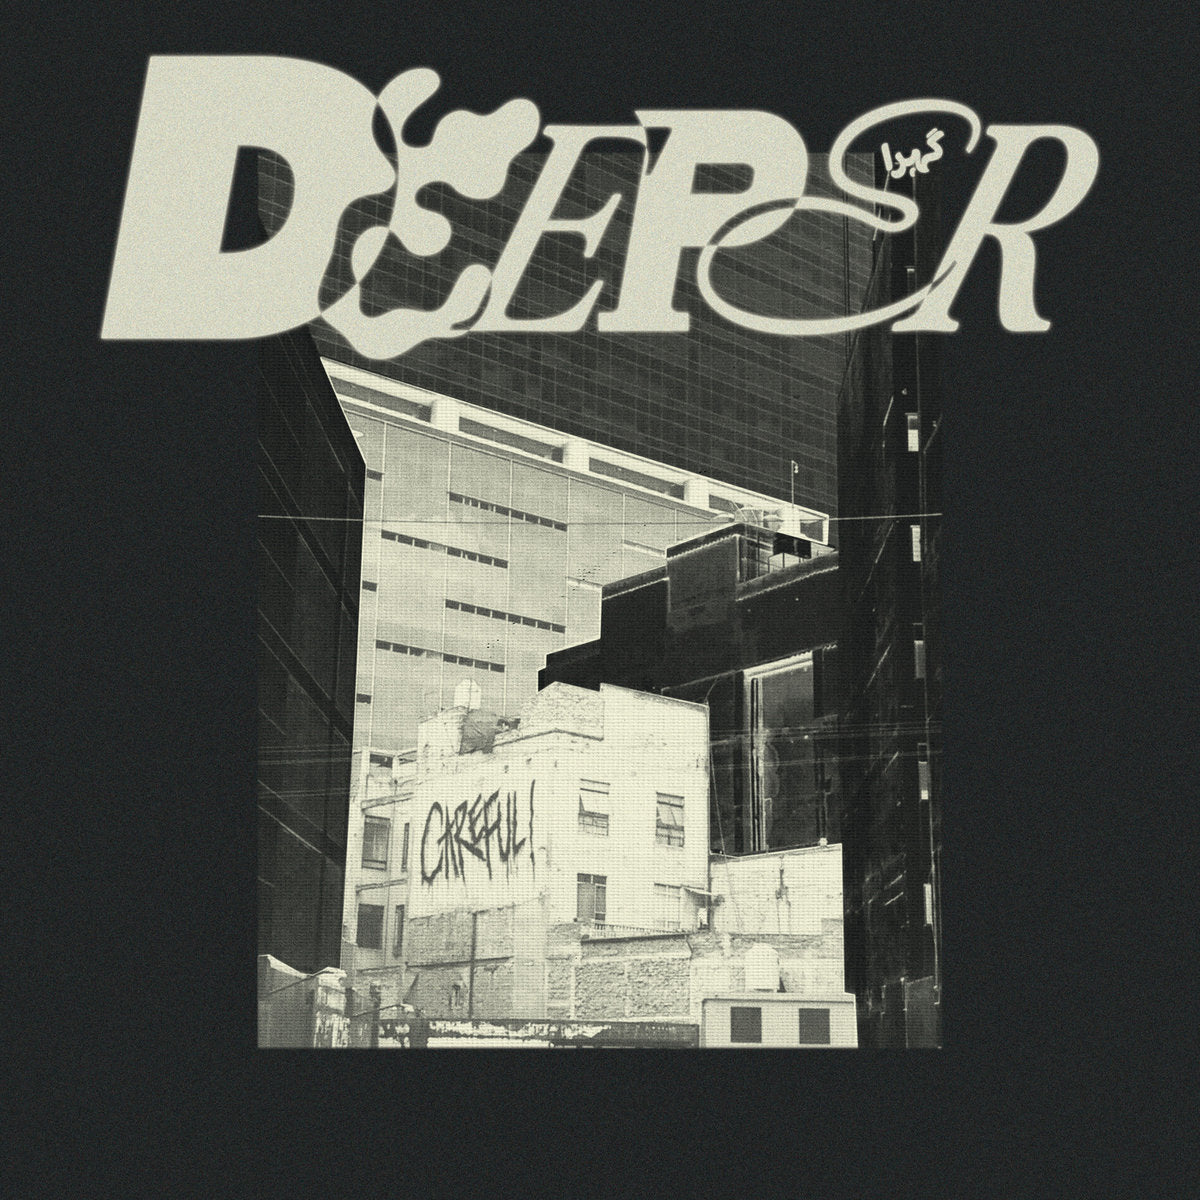 DEEPER - Careful (Sub Pop 'Loser' Edition) - LP - Neon Orange Vinyl